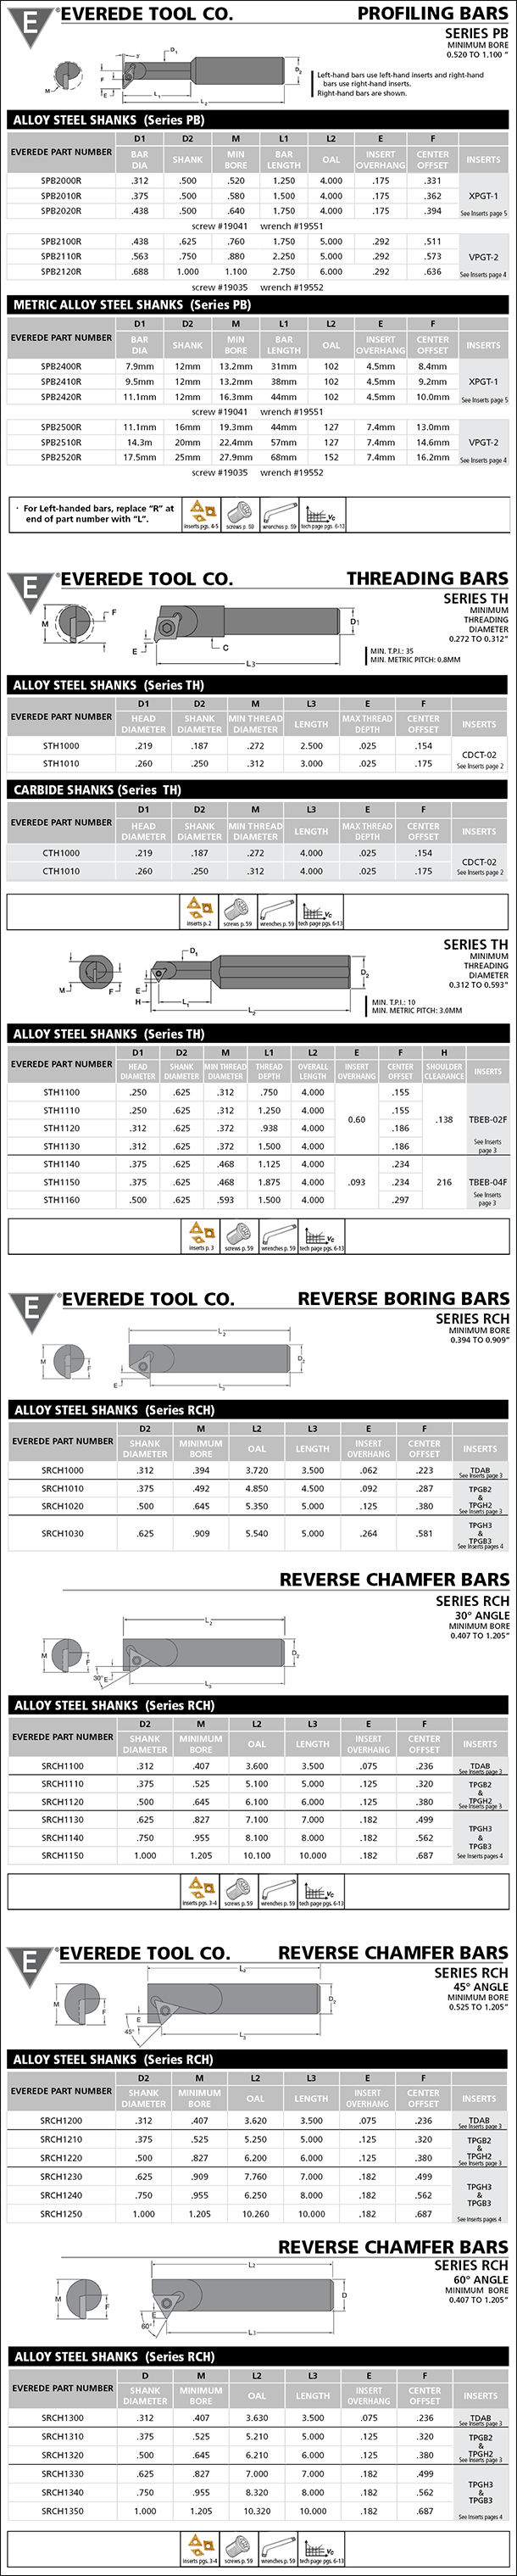 2014 Everede Catalog Series PB, TH & RCH Boring Bars